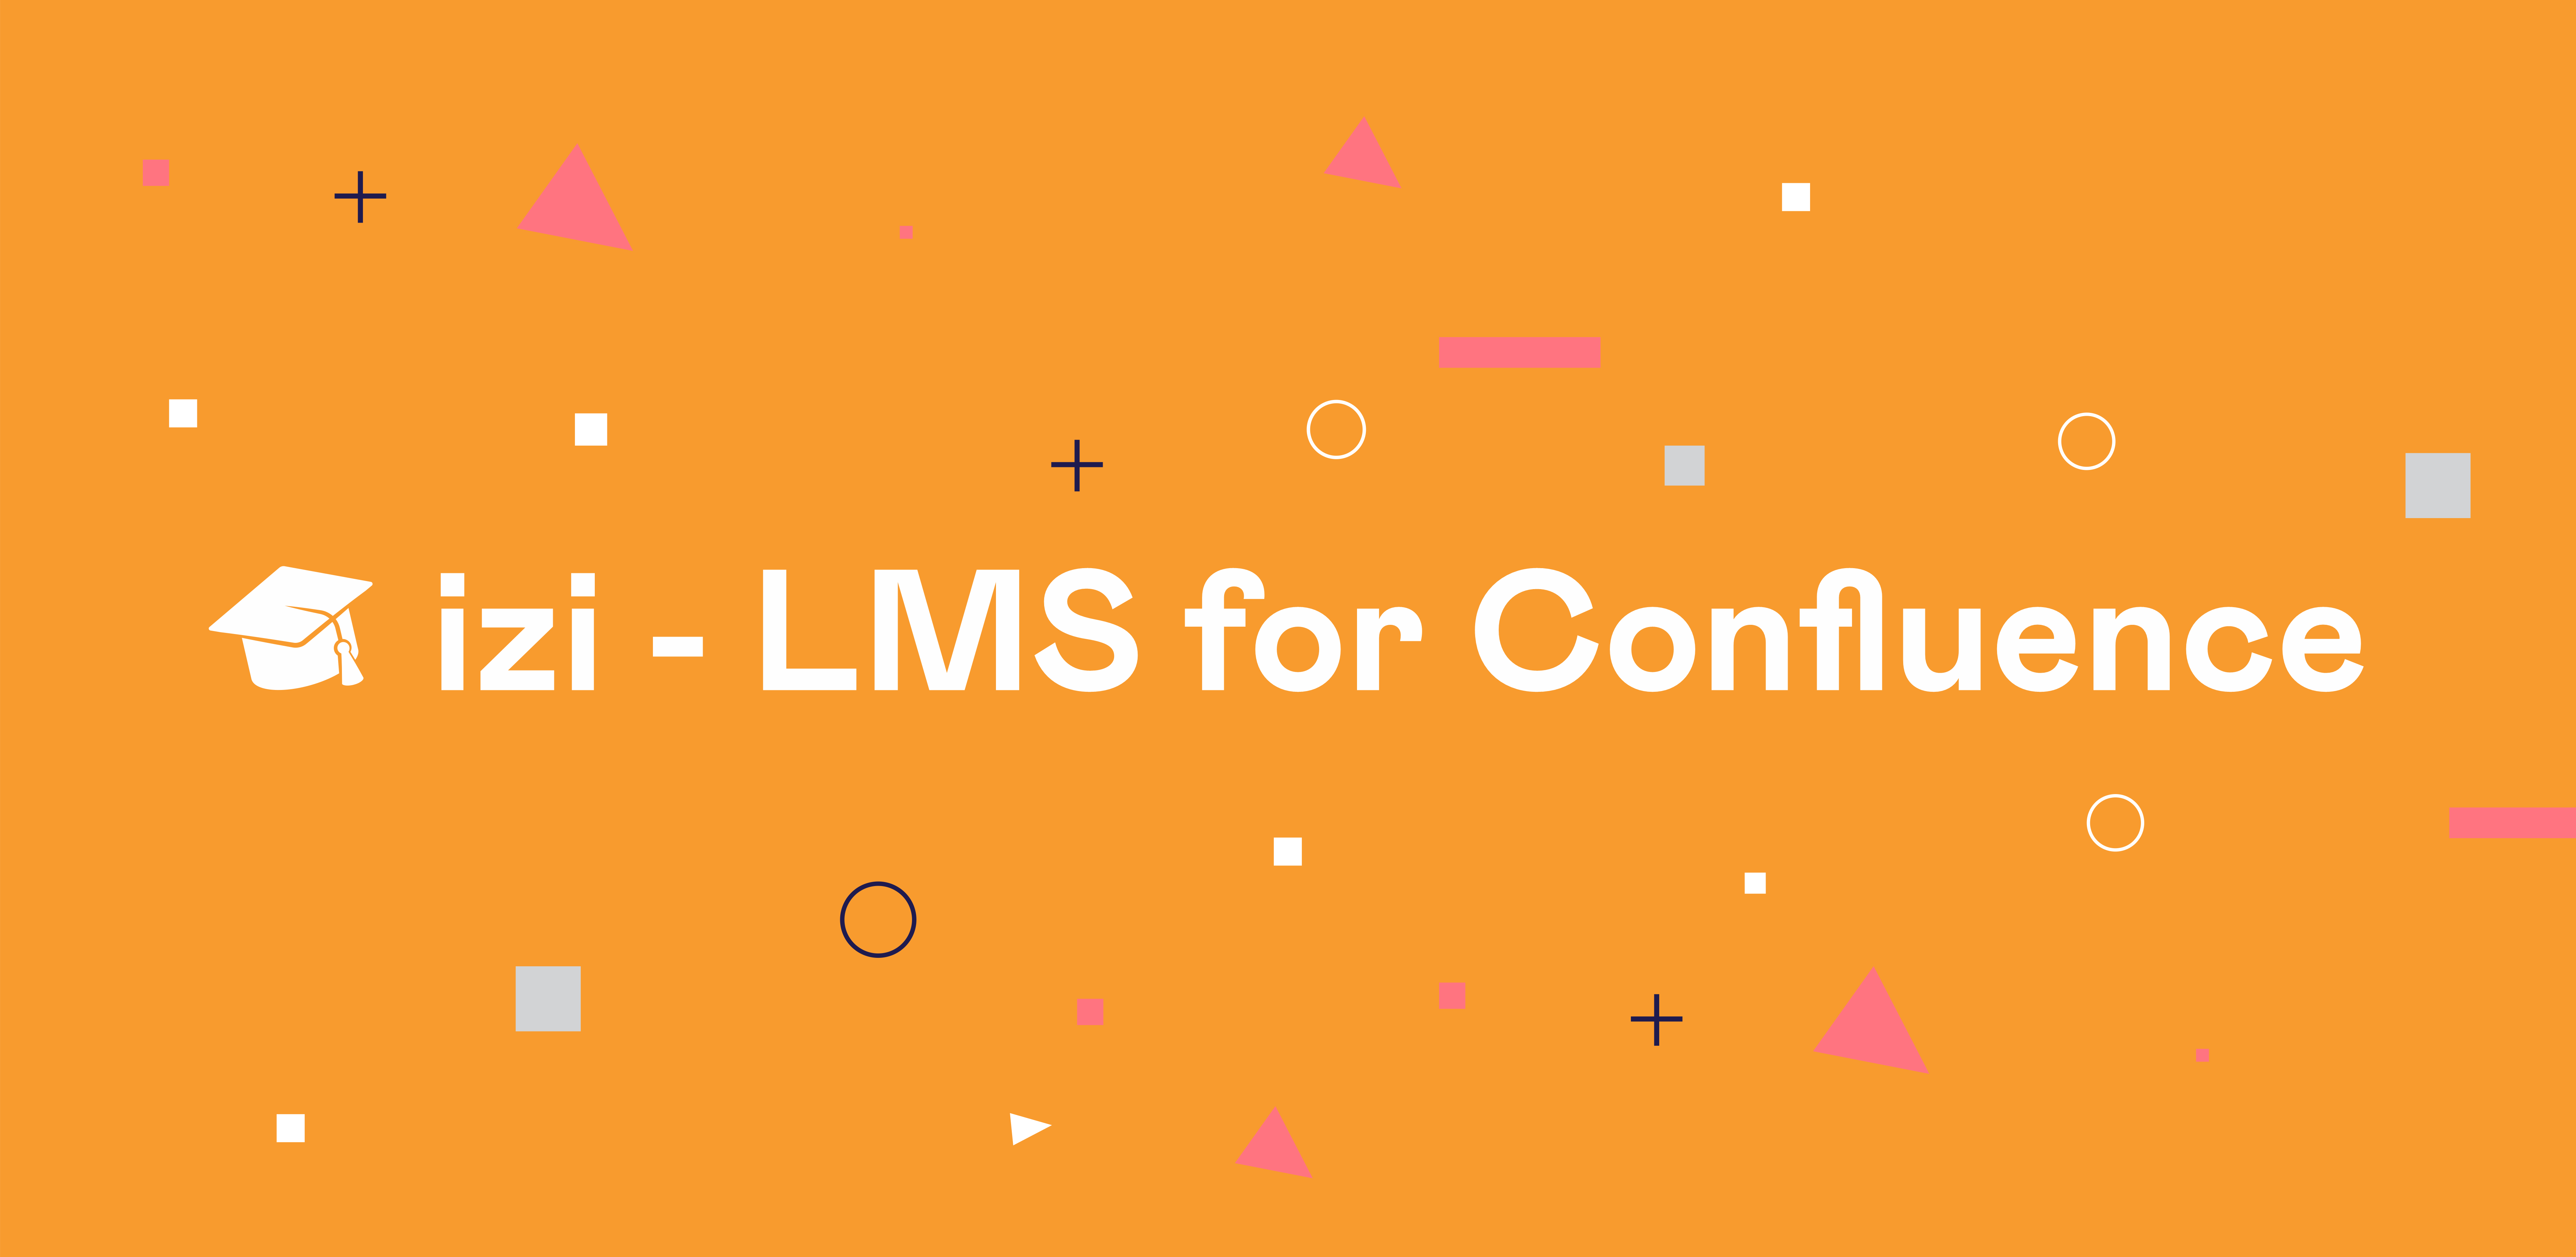 izi - LMS for Confluence